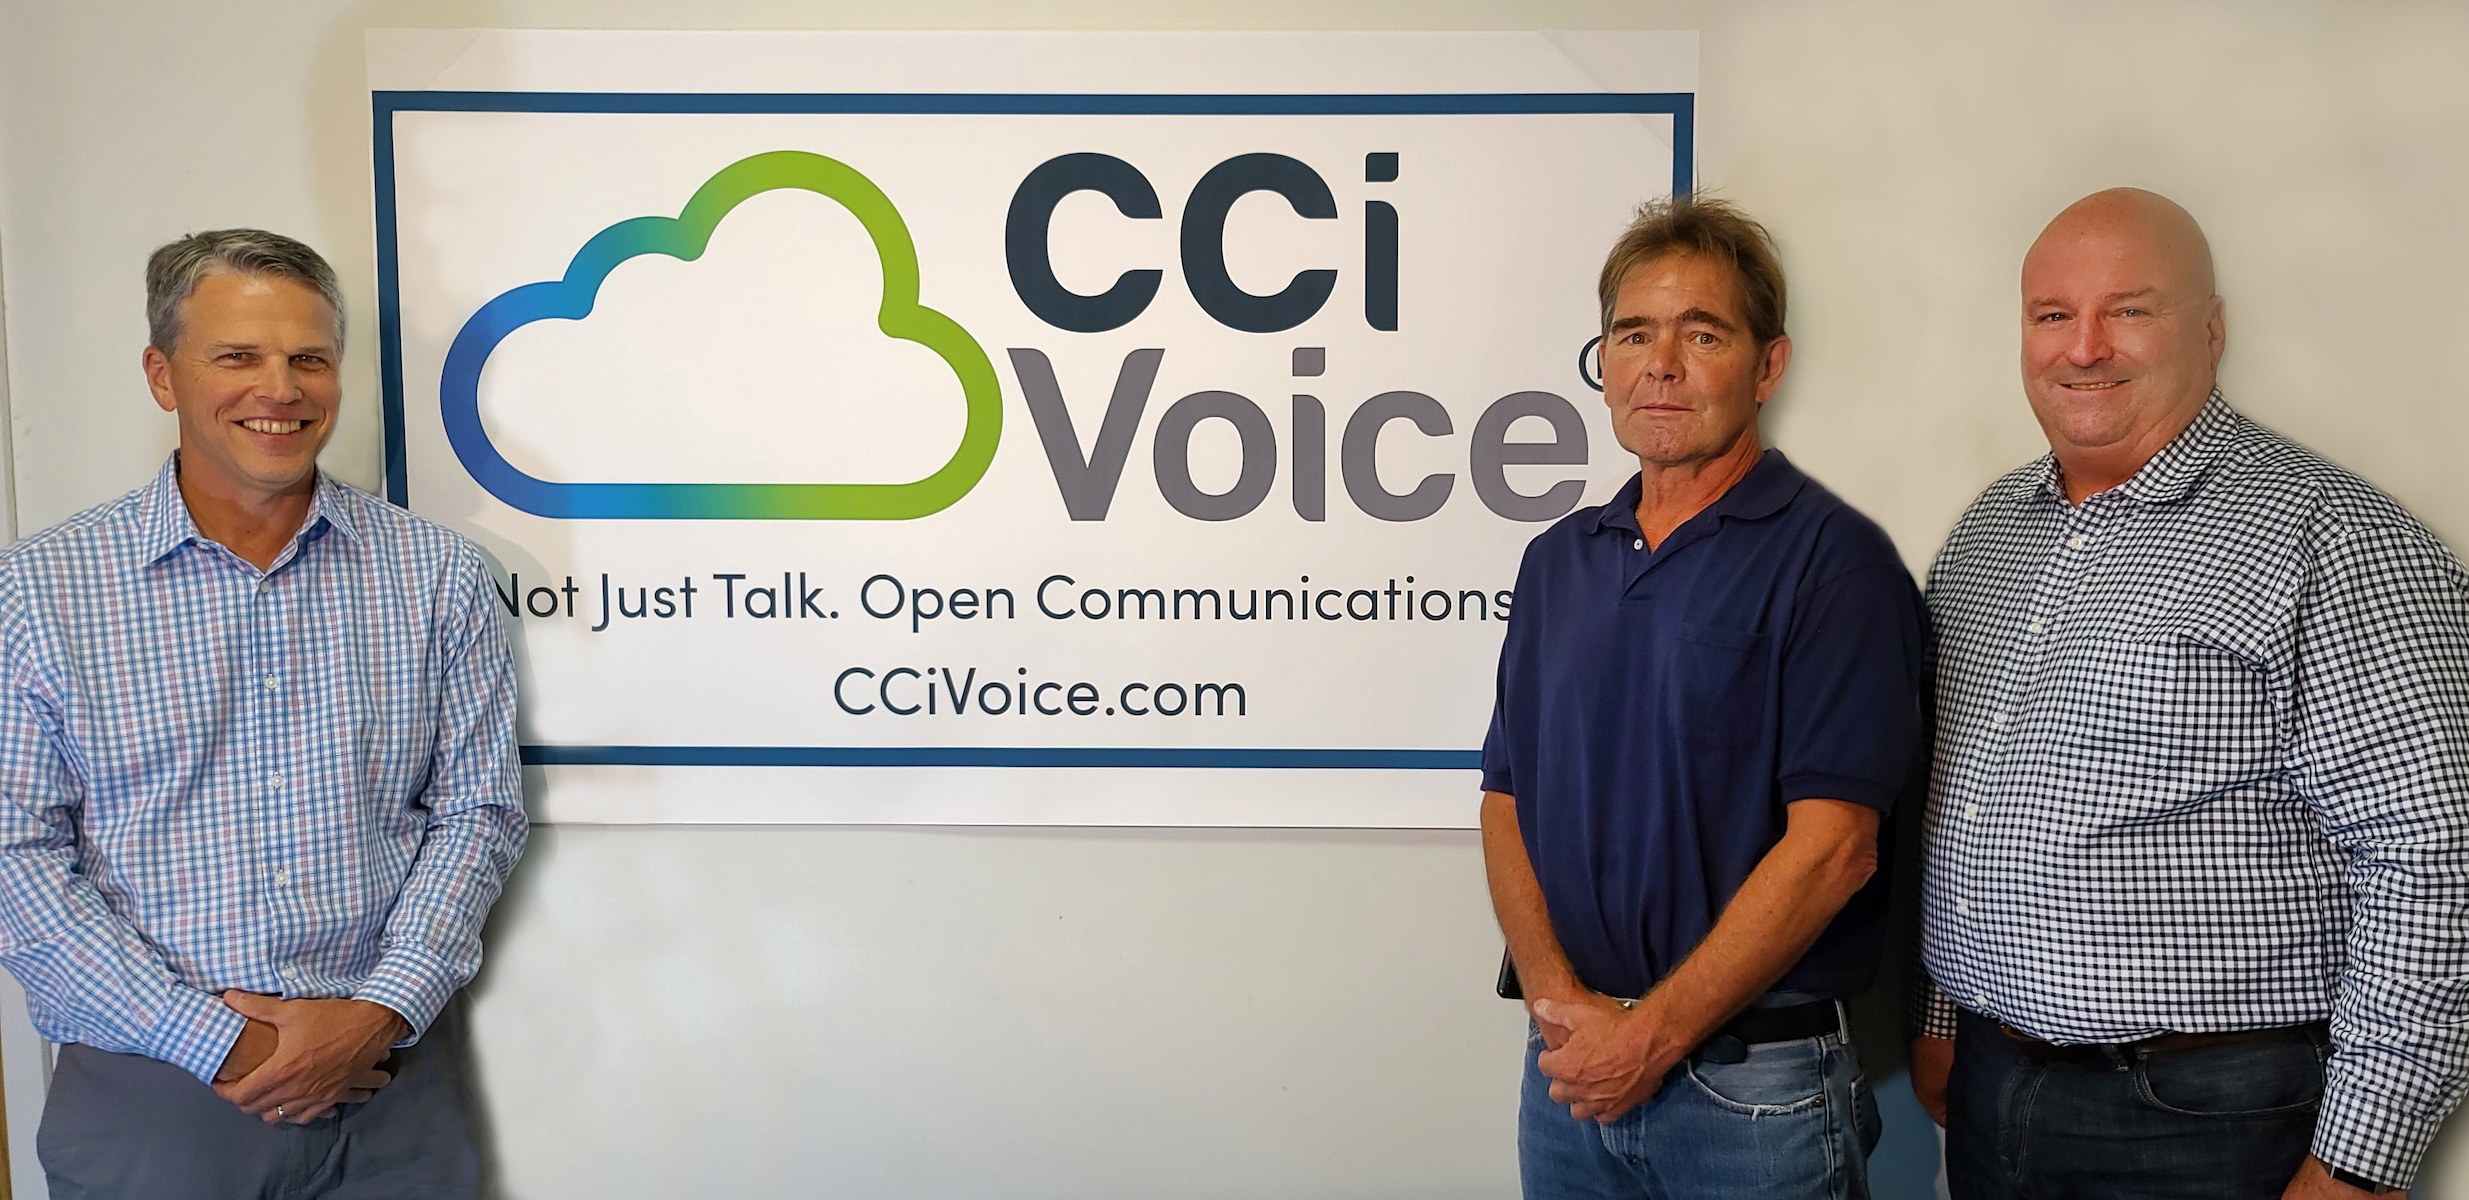 CCi Voice, Thursday, September 10, 2020, Press release picture